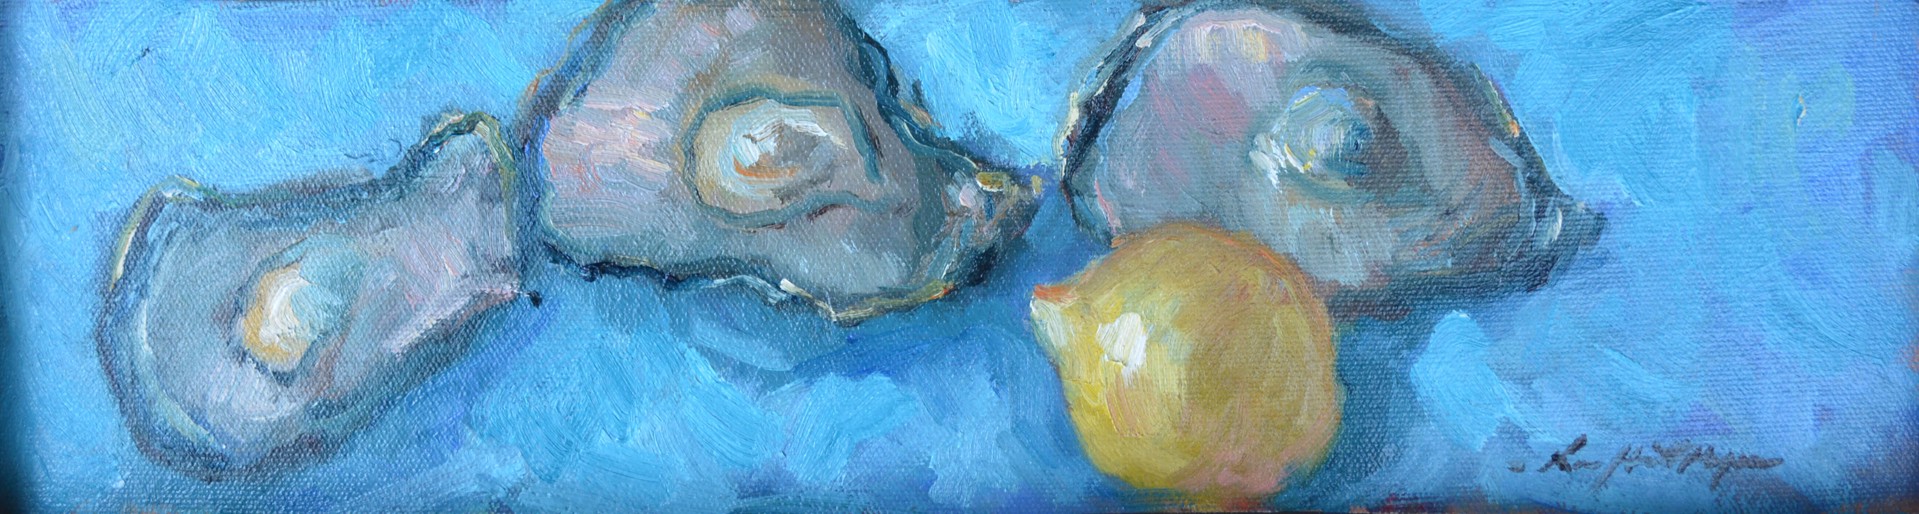 Oyster Season I by Karen Hewitt Hagan